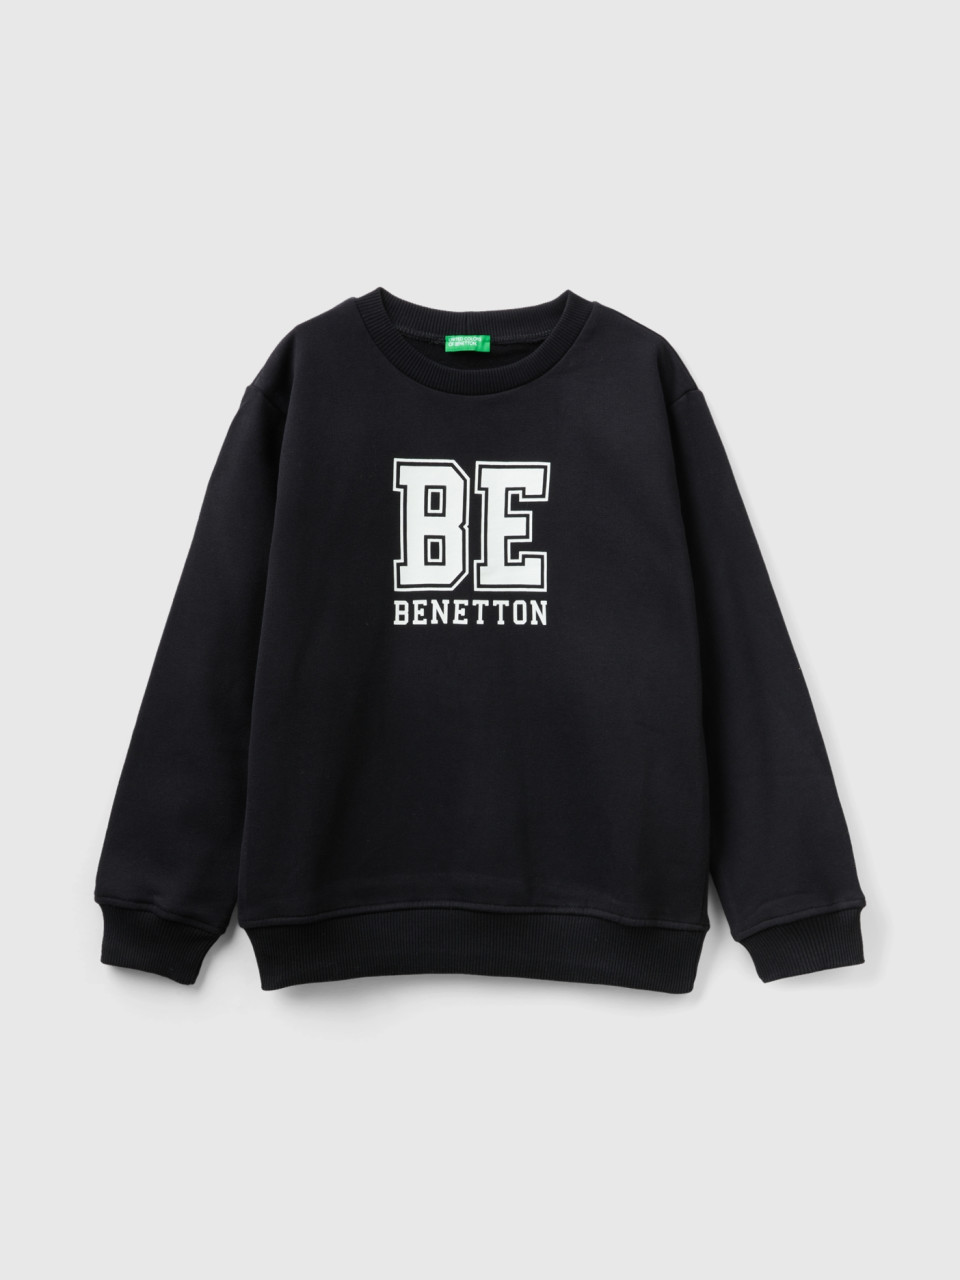 Benetton, Warm Sweatshirt With Logo, Black, Kids